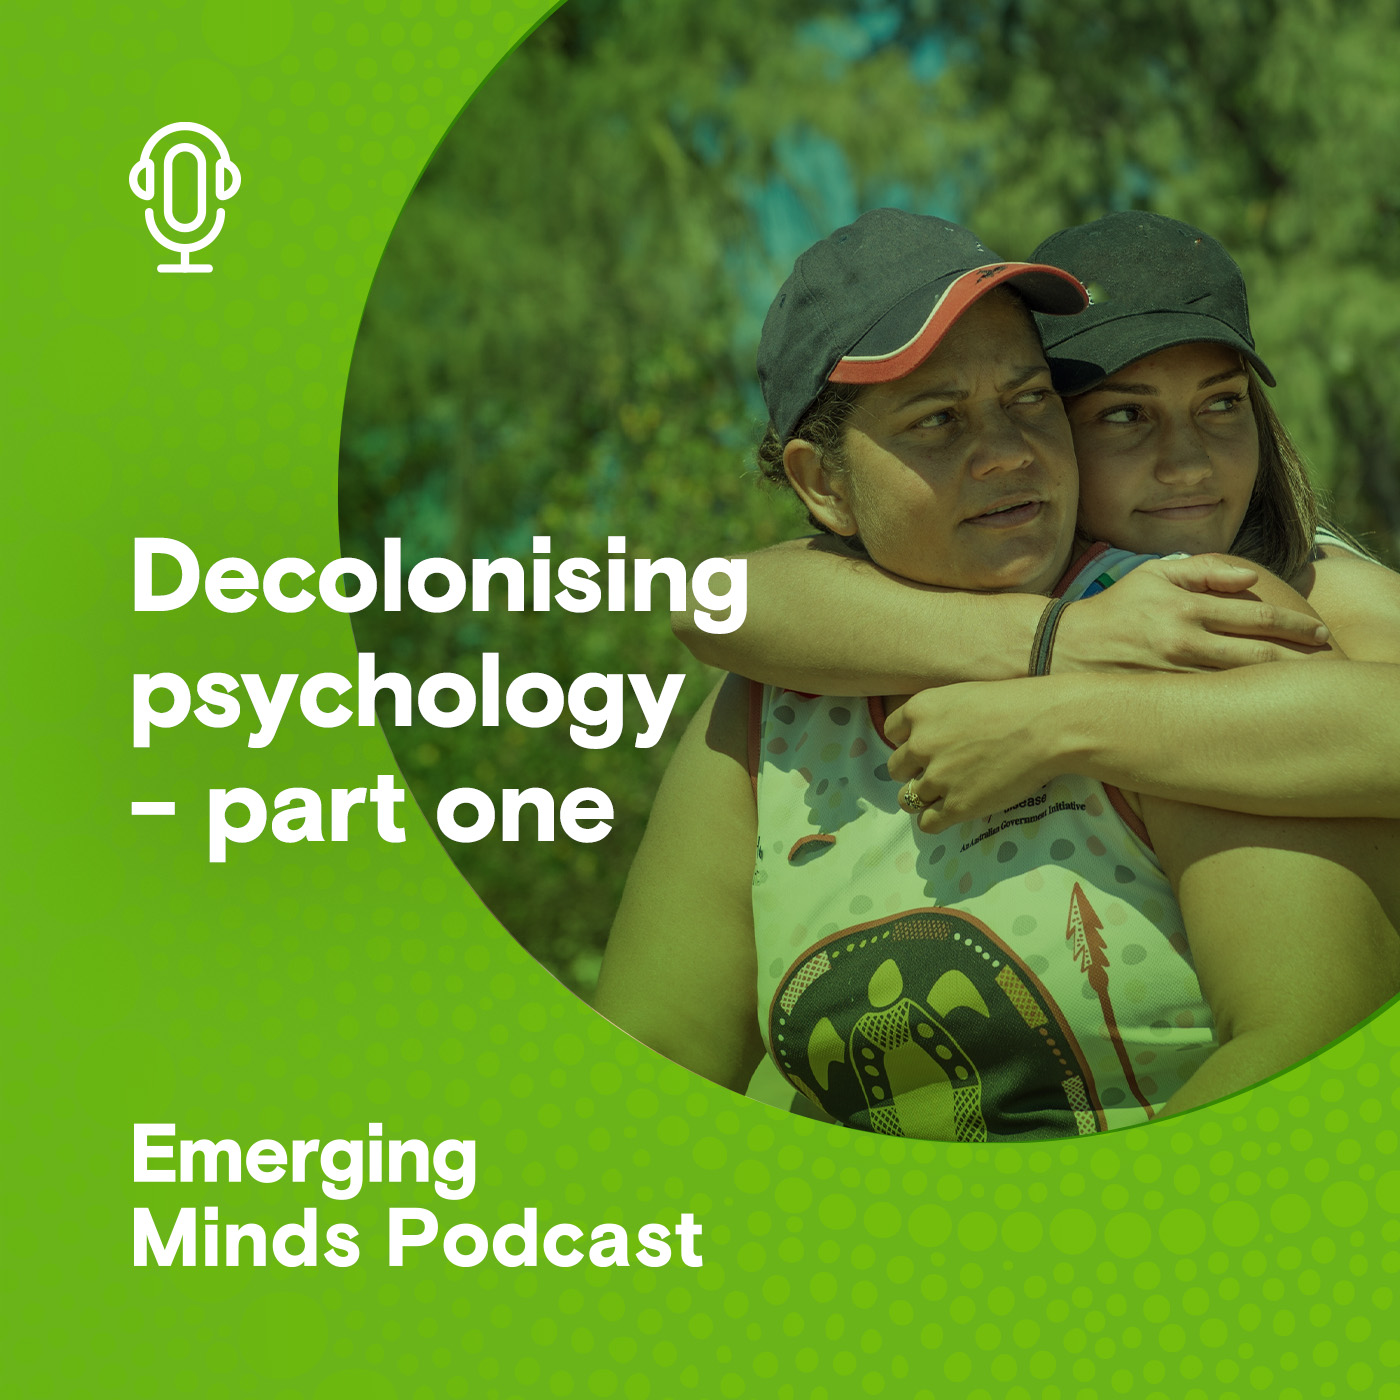 Decolonising psychology - part one